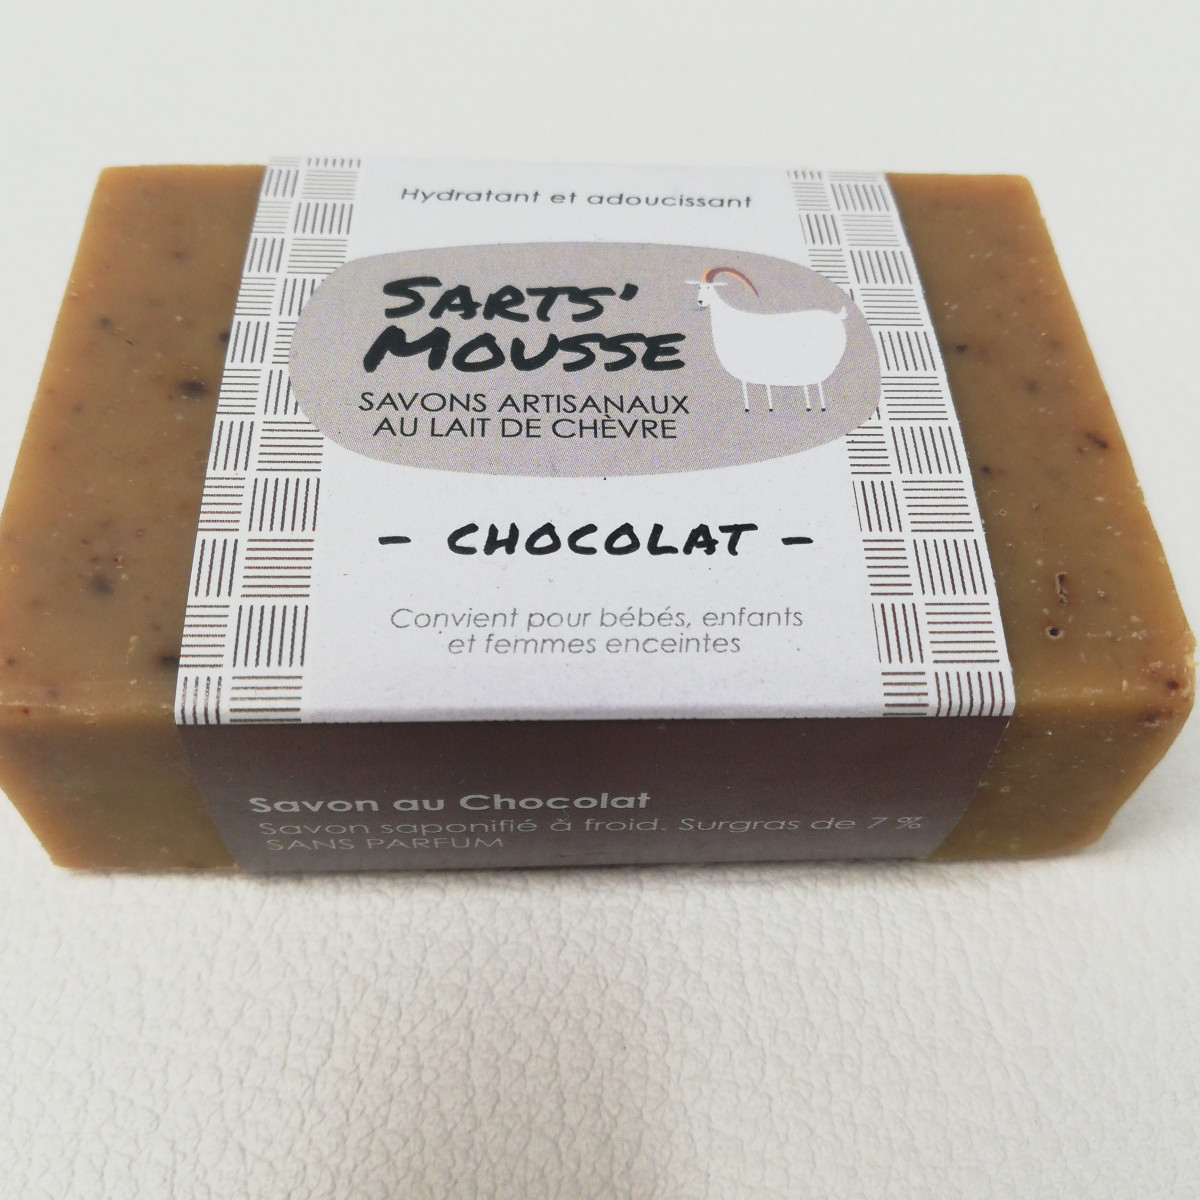 Savon Sart's mousse - Chocolat - Boutique Toup'tibou - photo 6